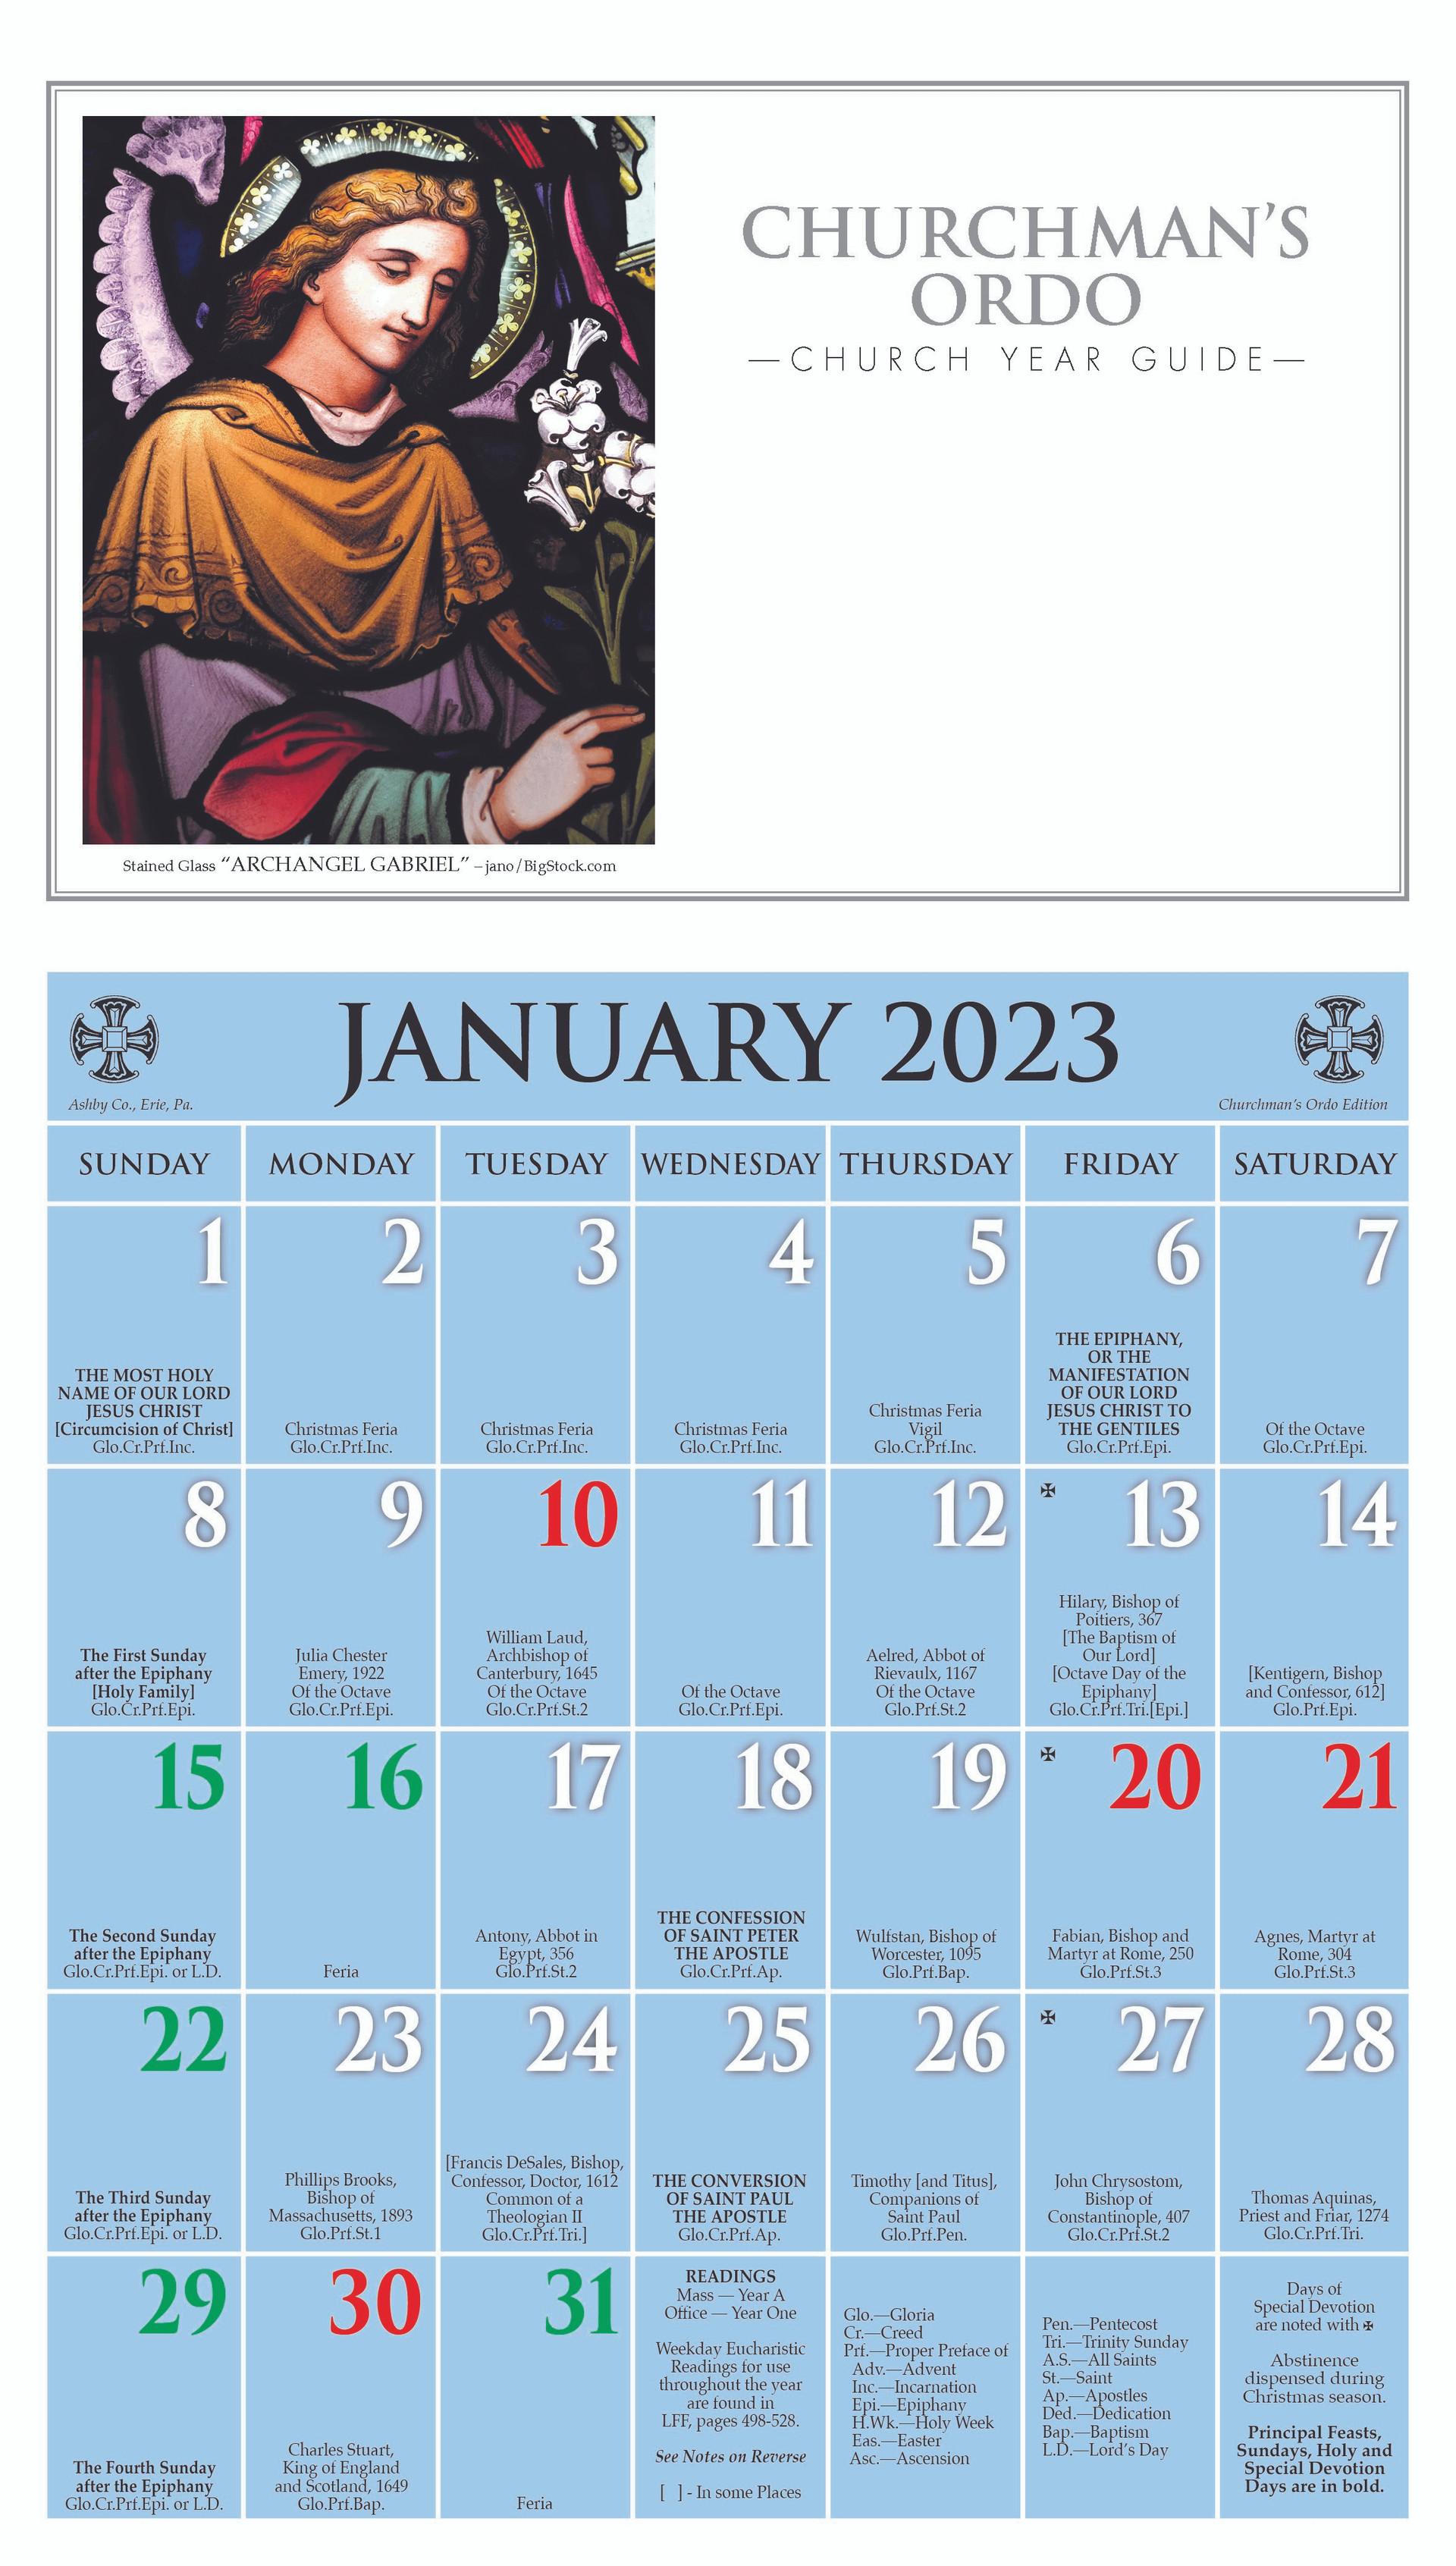 Episcopal Church Year Guide Kalendar (Calendar) 2023 - Episcopal Shoppe